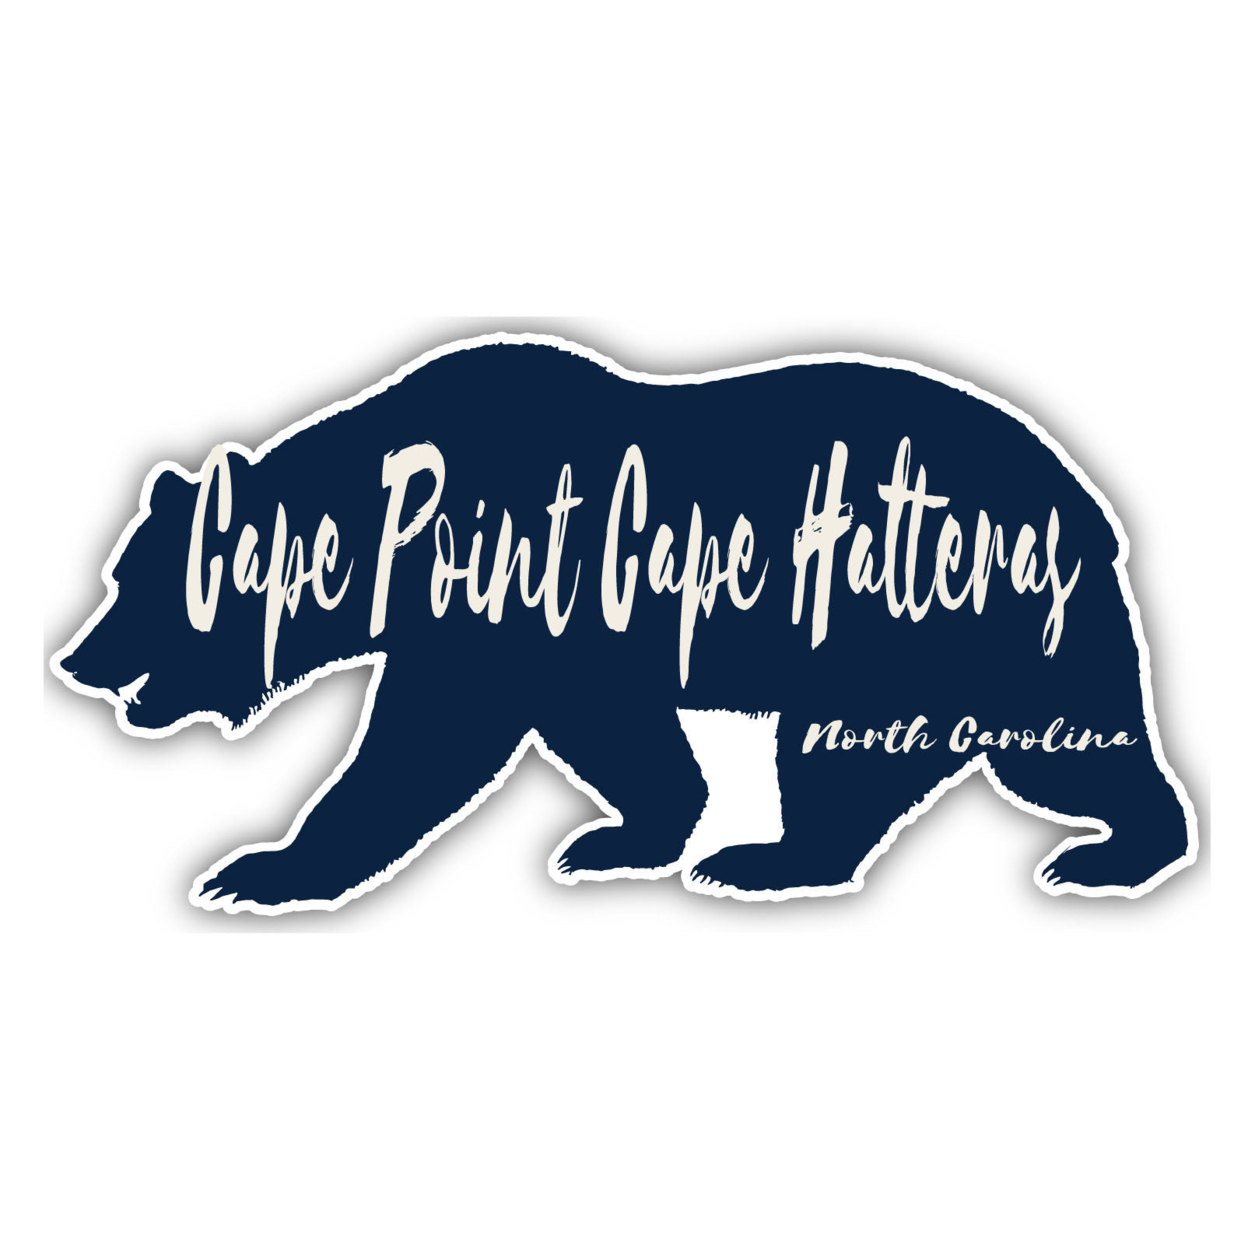 Cape Point Cape Hatteras North Carolina Souvenir Decorative Stickers (Choose Theme And Size) - Single Unit, 4-Inch, Bear